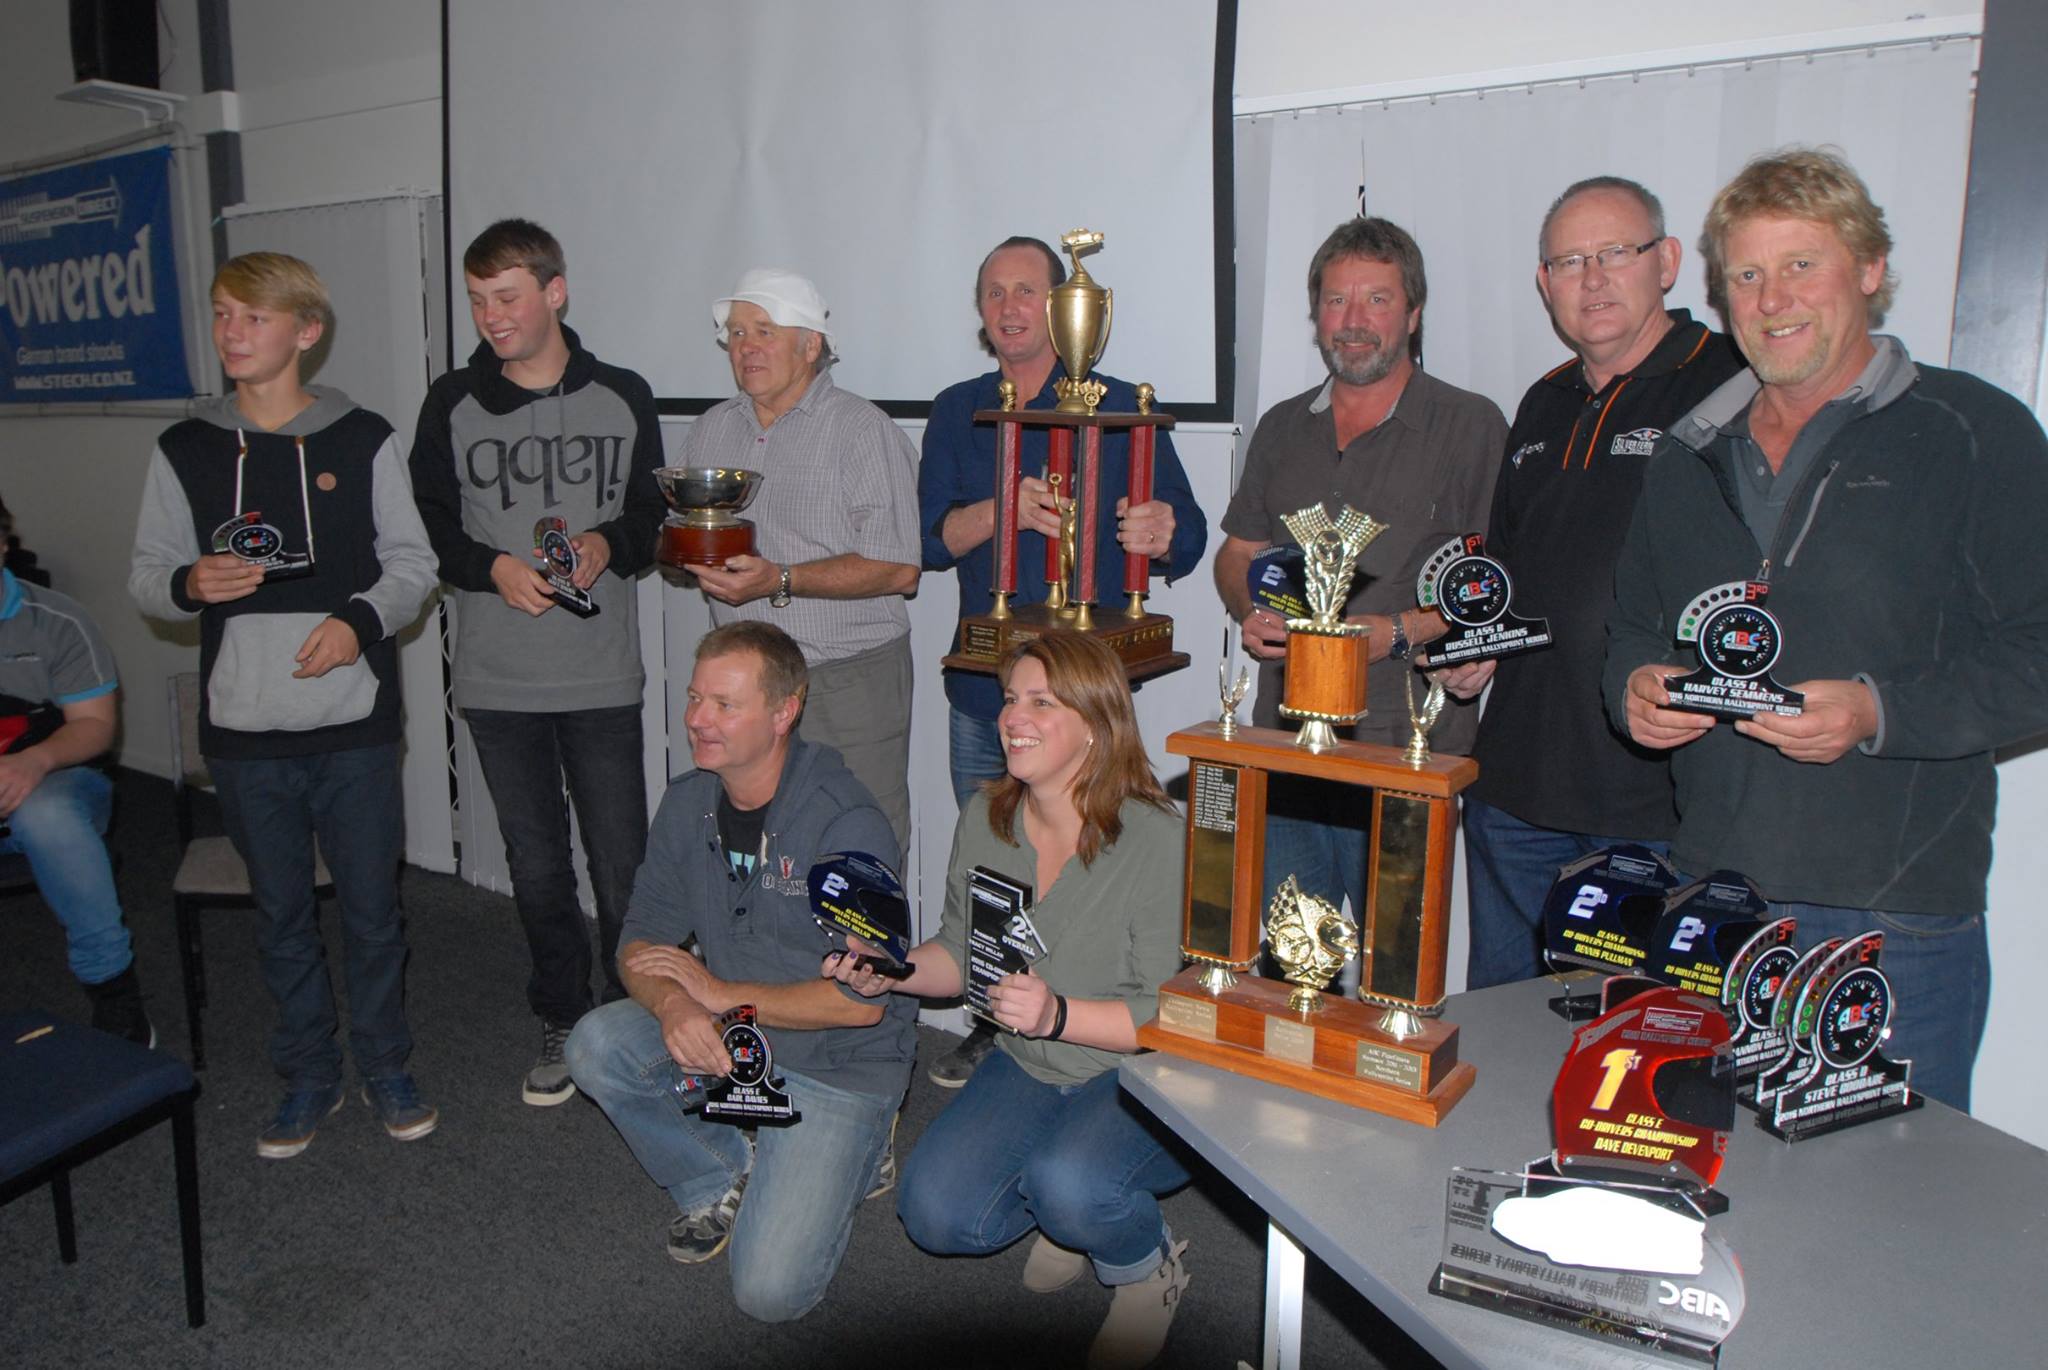 ABC Pipefitters Northern Rallysprint Series 2016 trophy winners